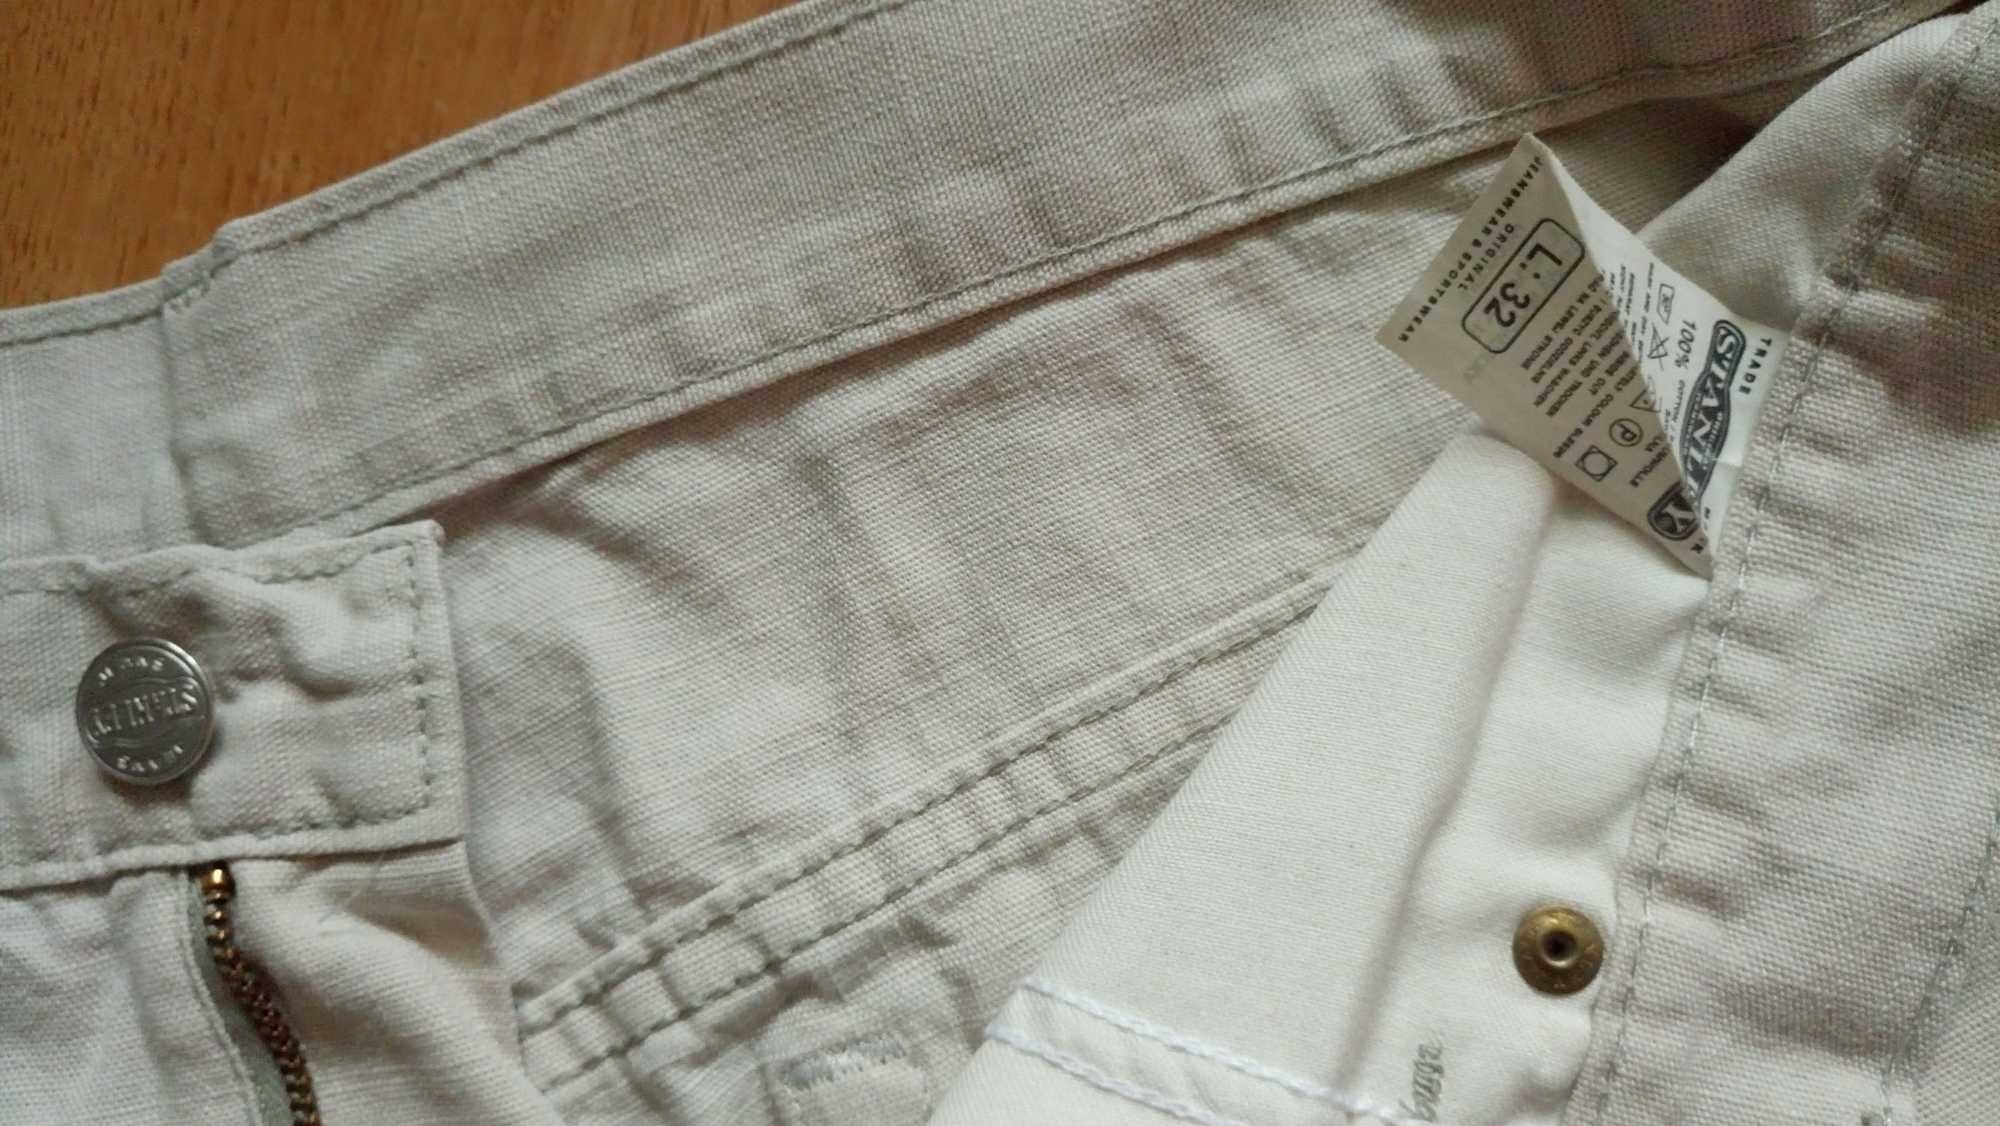 Spodnie/jeansy stanley original, rozm. L32